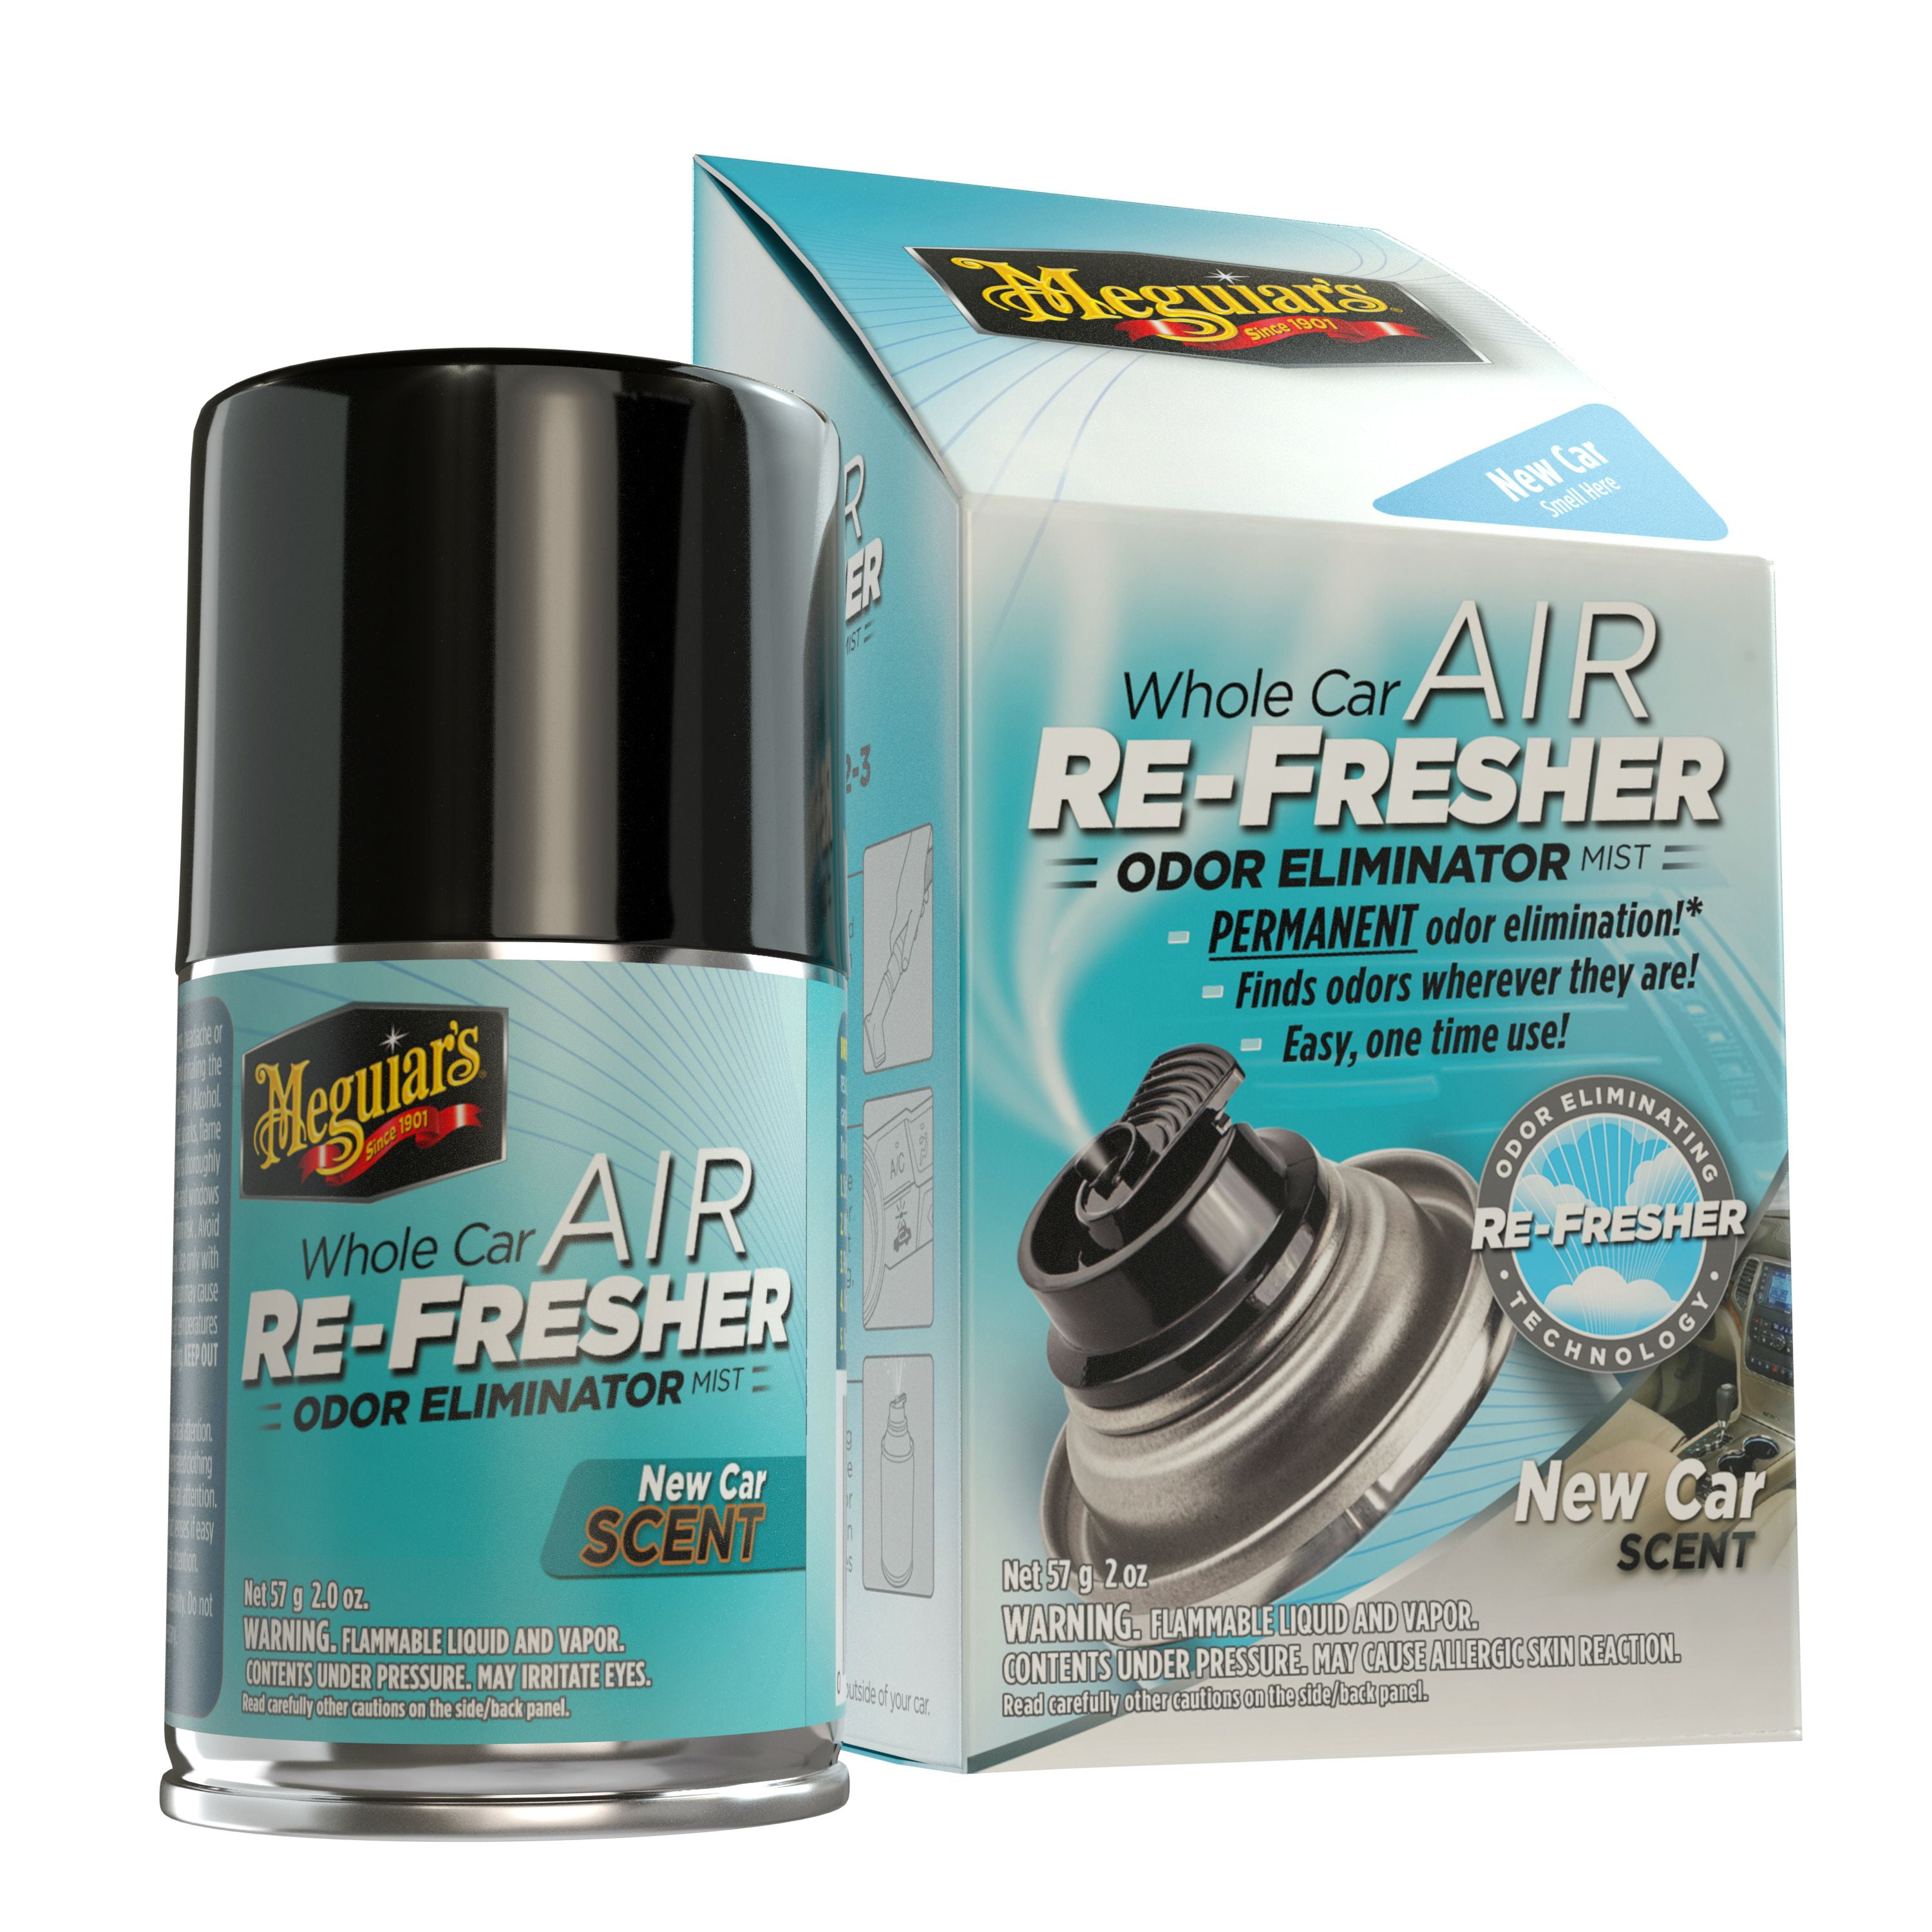 Meguiar S Whole Car Air Re Fresher Odor Eliminator Mist New Car Scent G16402 2 Oz Walmart Com